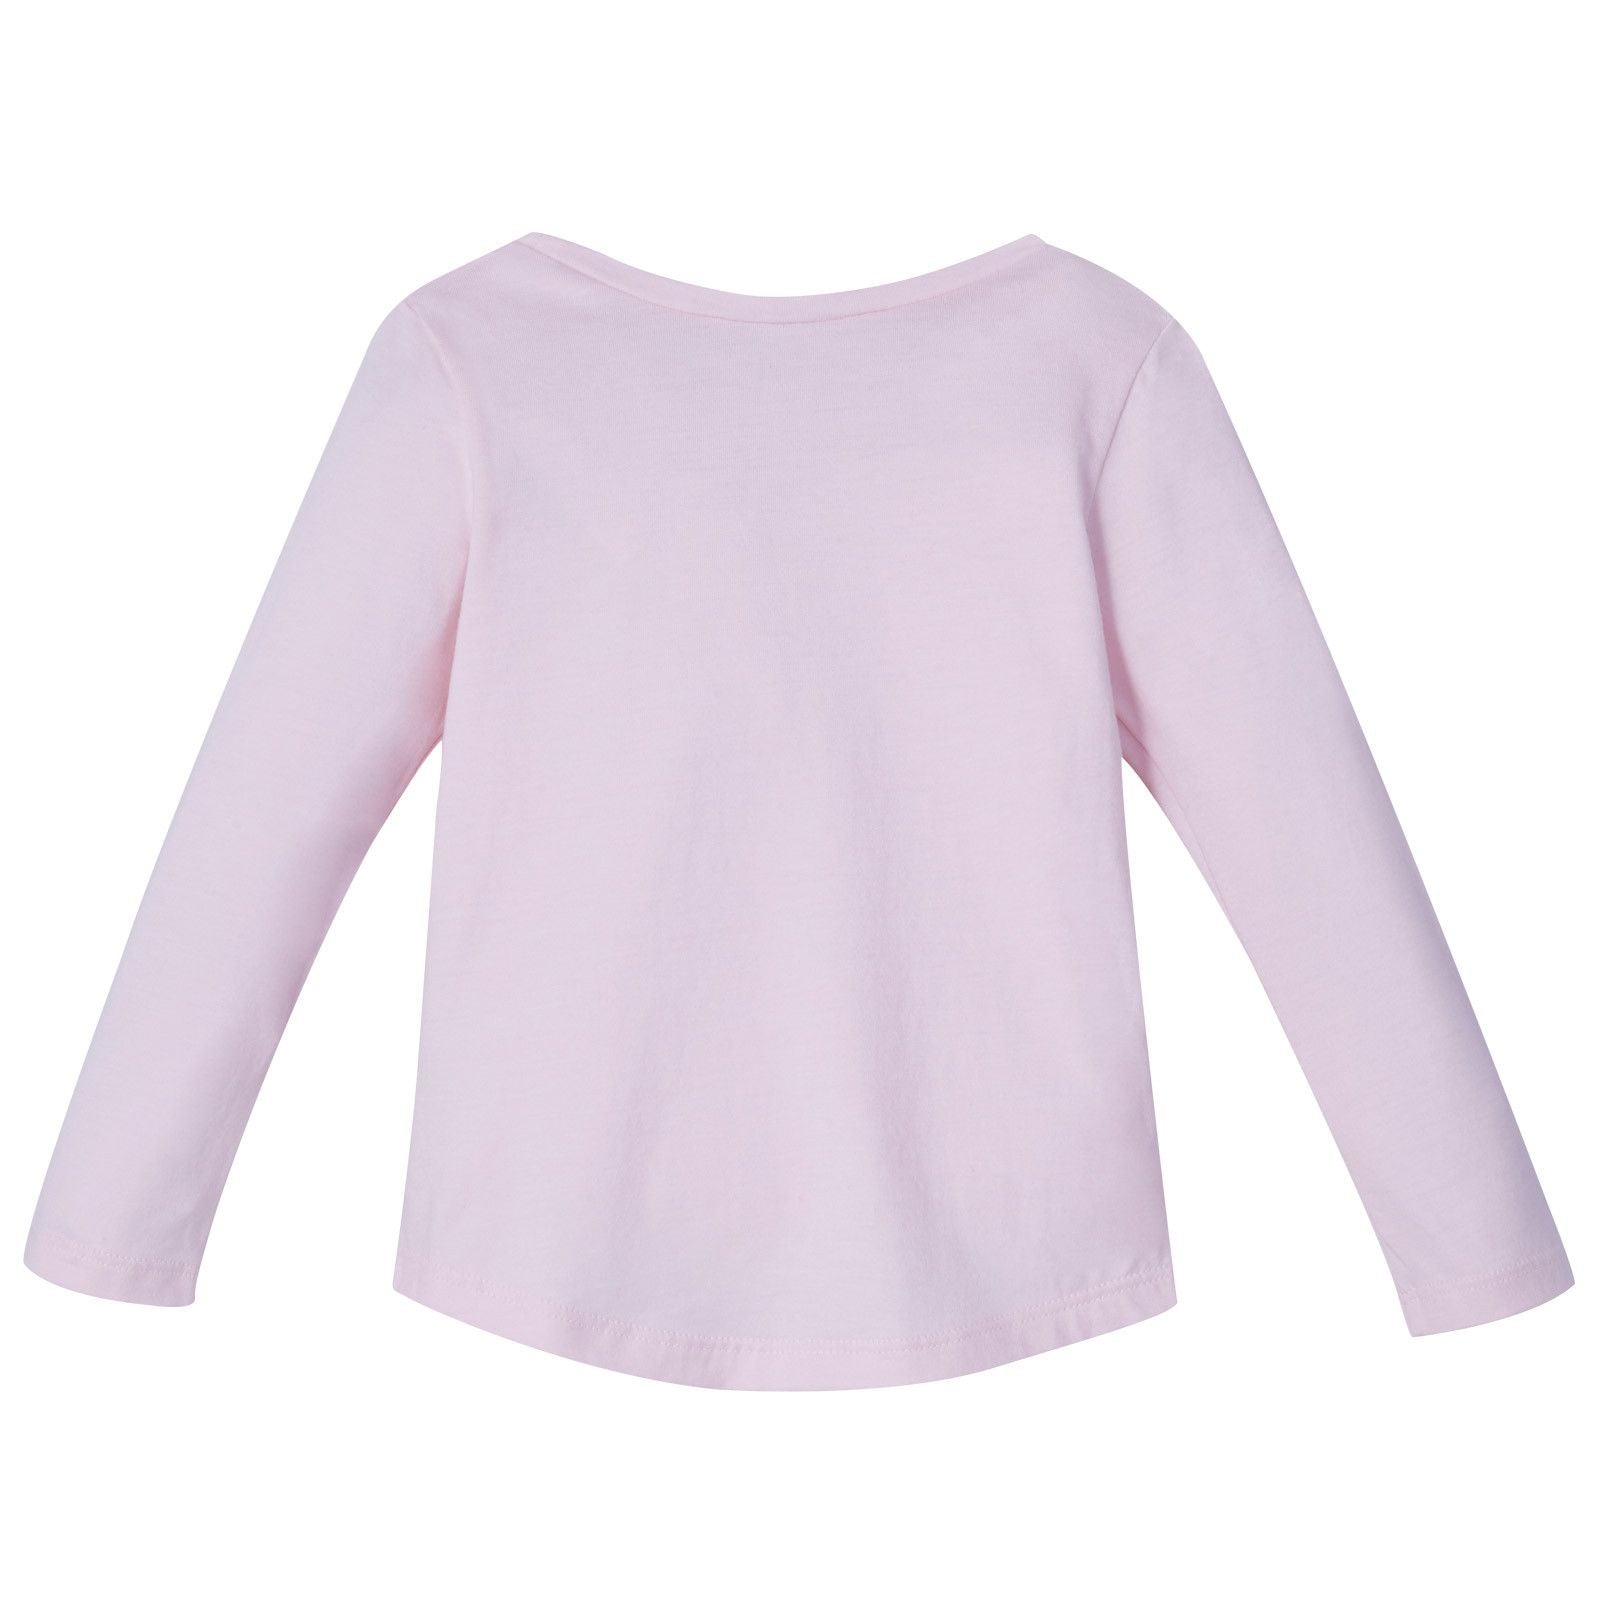 Girls Pink 'Miss Marc' Spaceman Printed T-Shirt - CÉMAROSE | Children's Fashion Store - 2